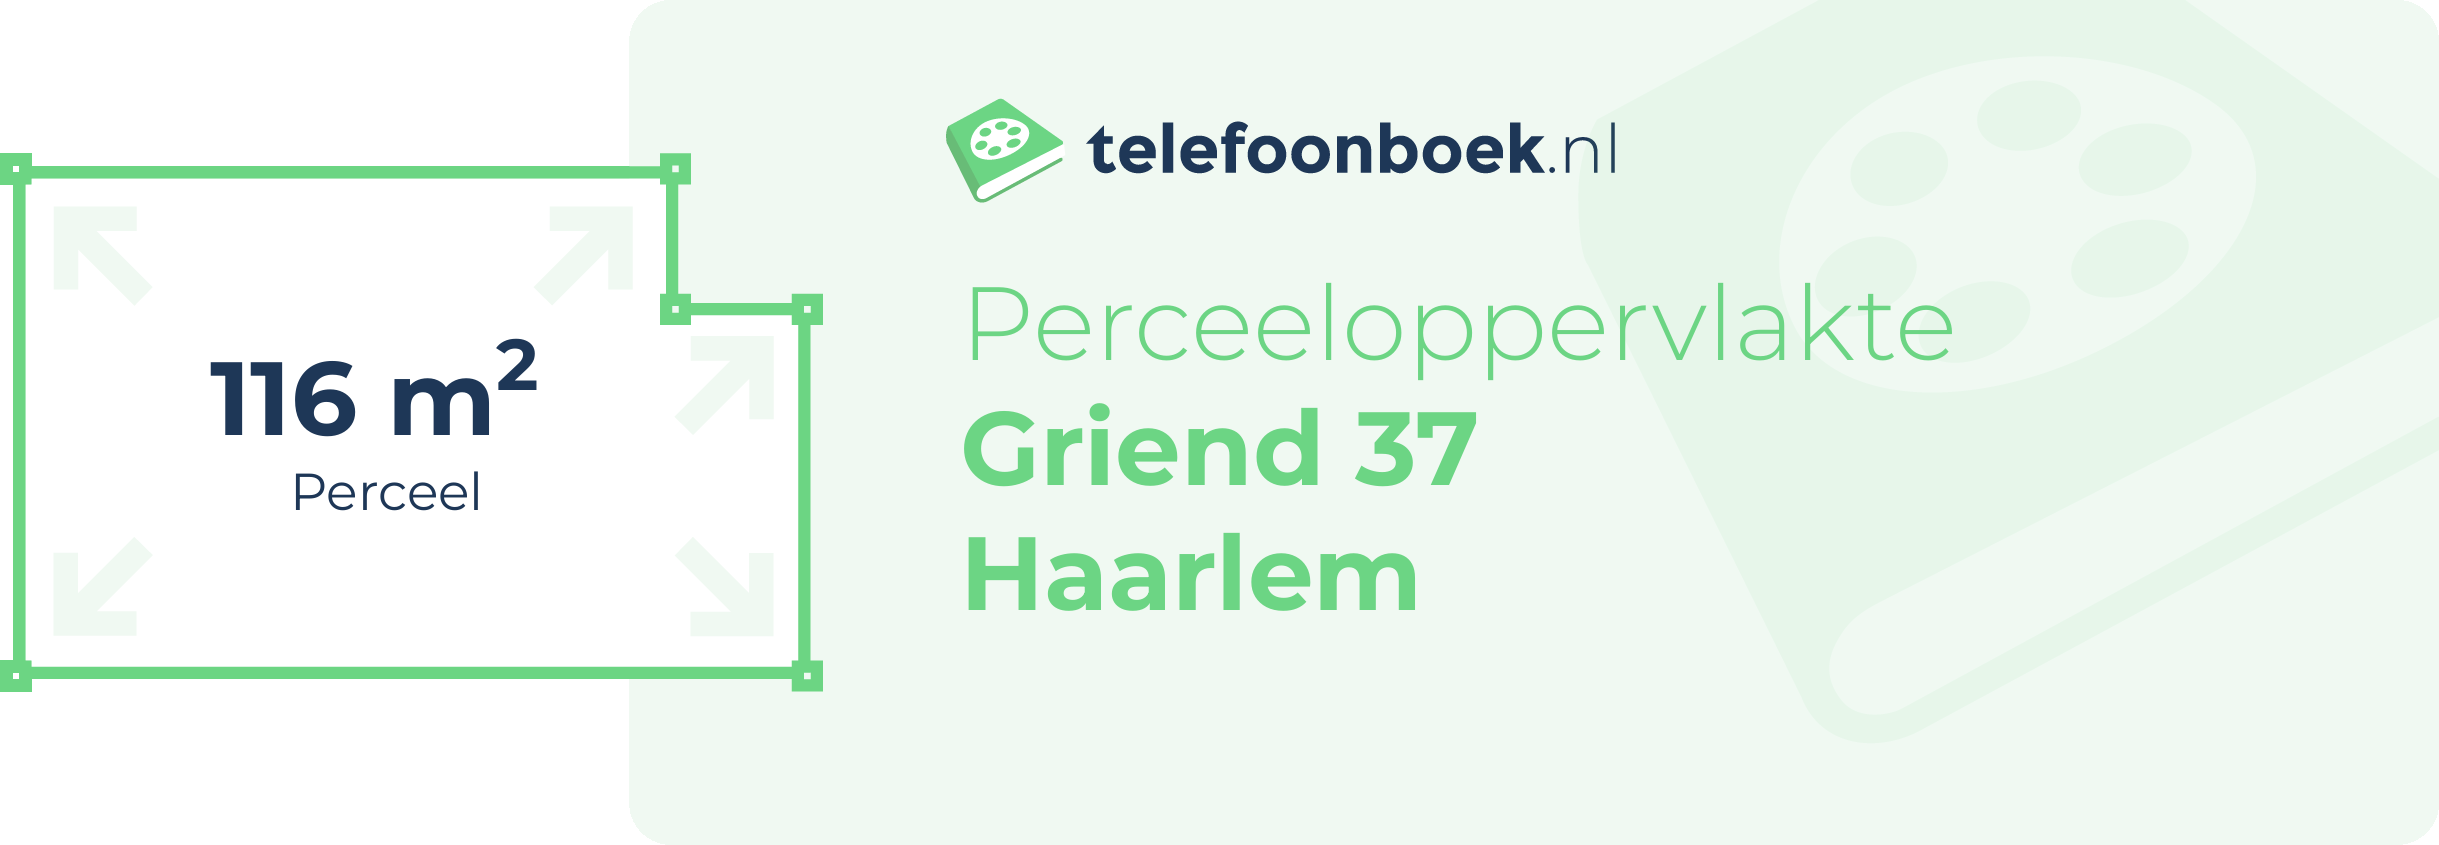 Perceeloppervlakte Griend 37 Haarlem